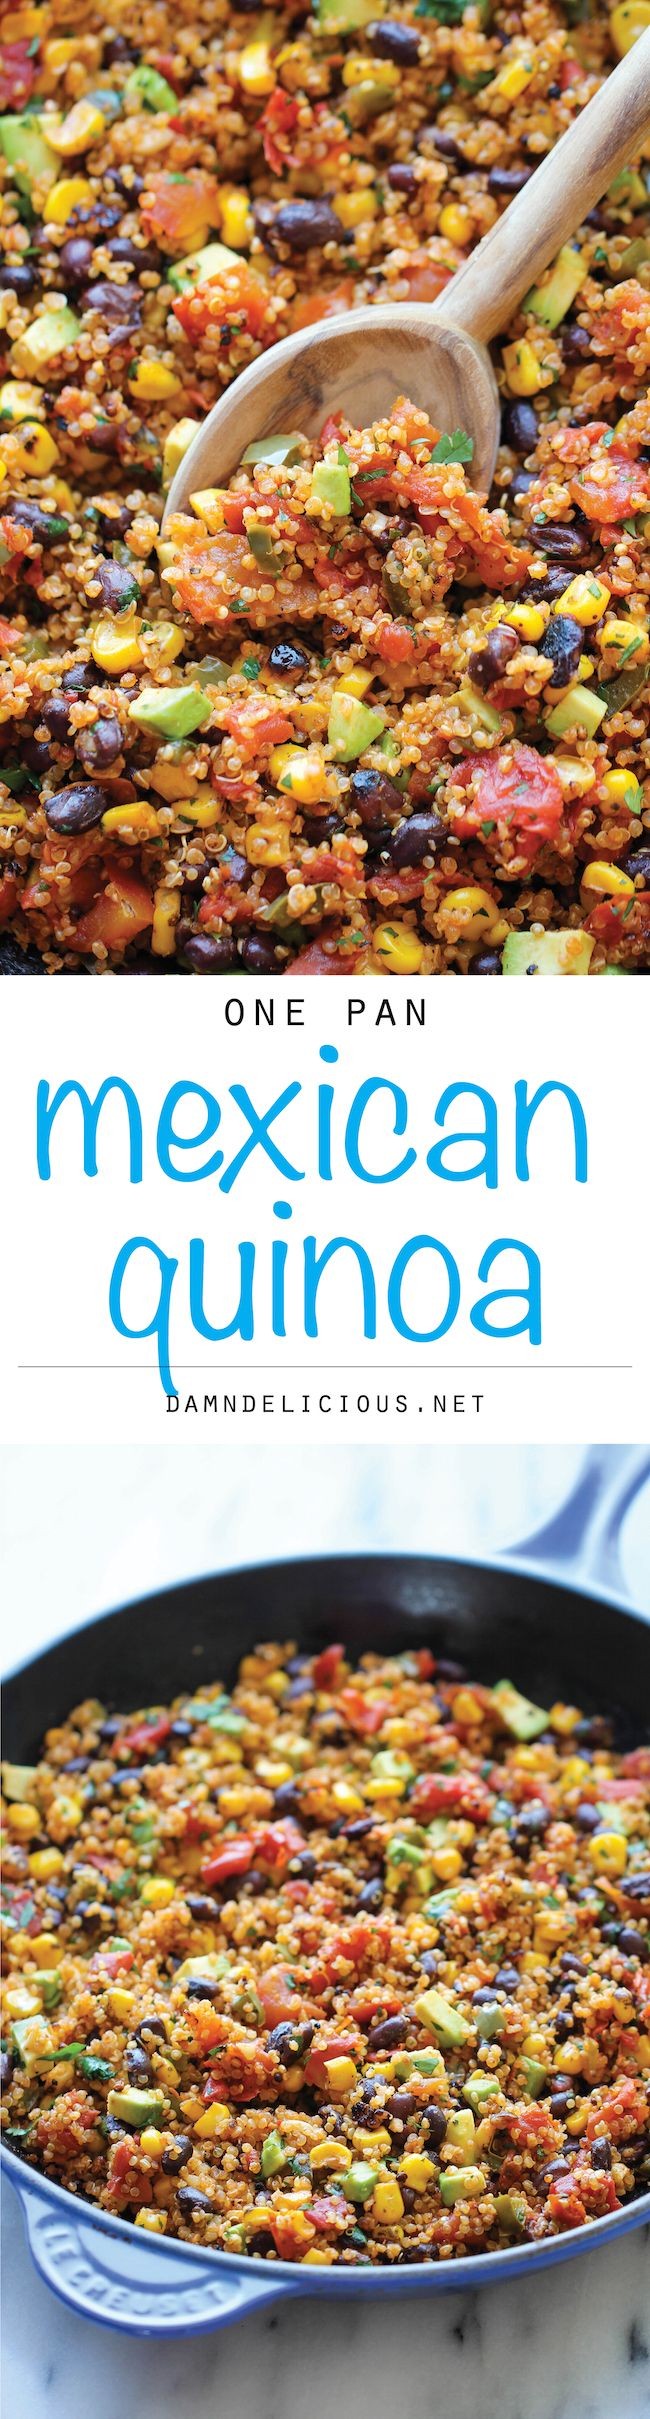 One Pan Mexican Quinoa - Wonderfully light, health...